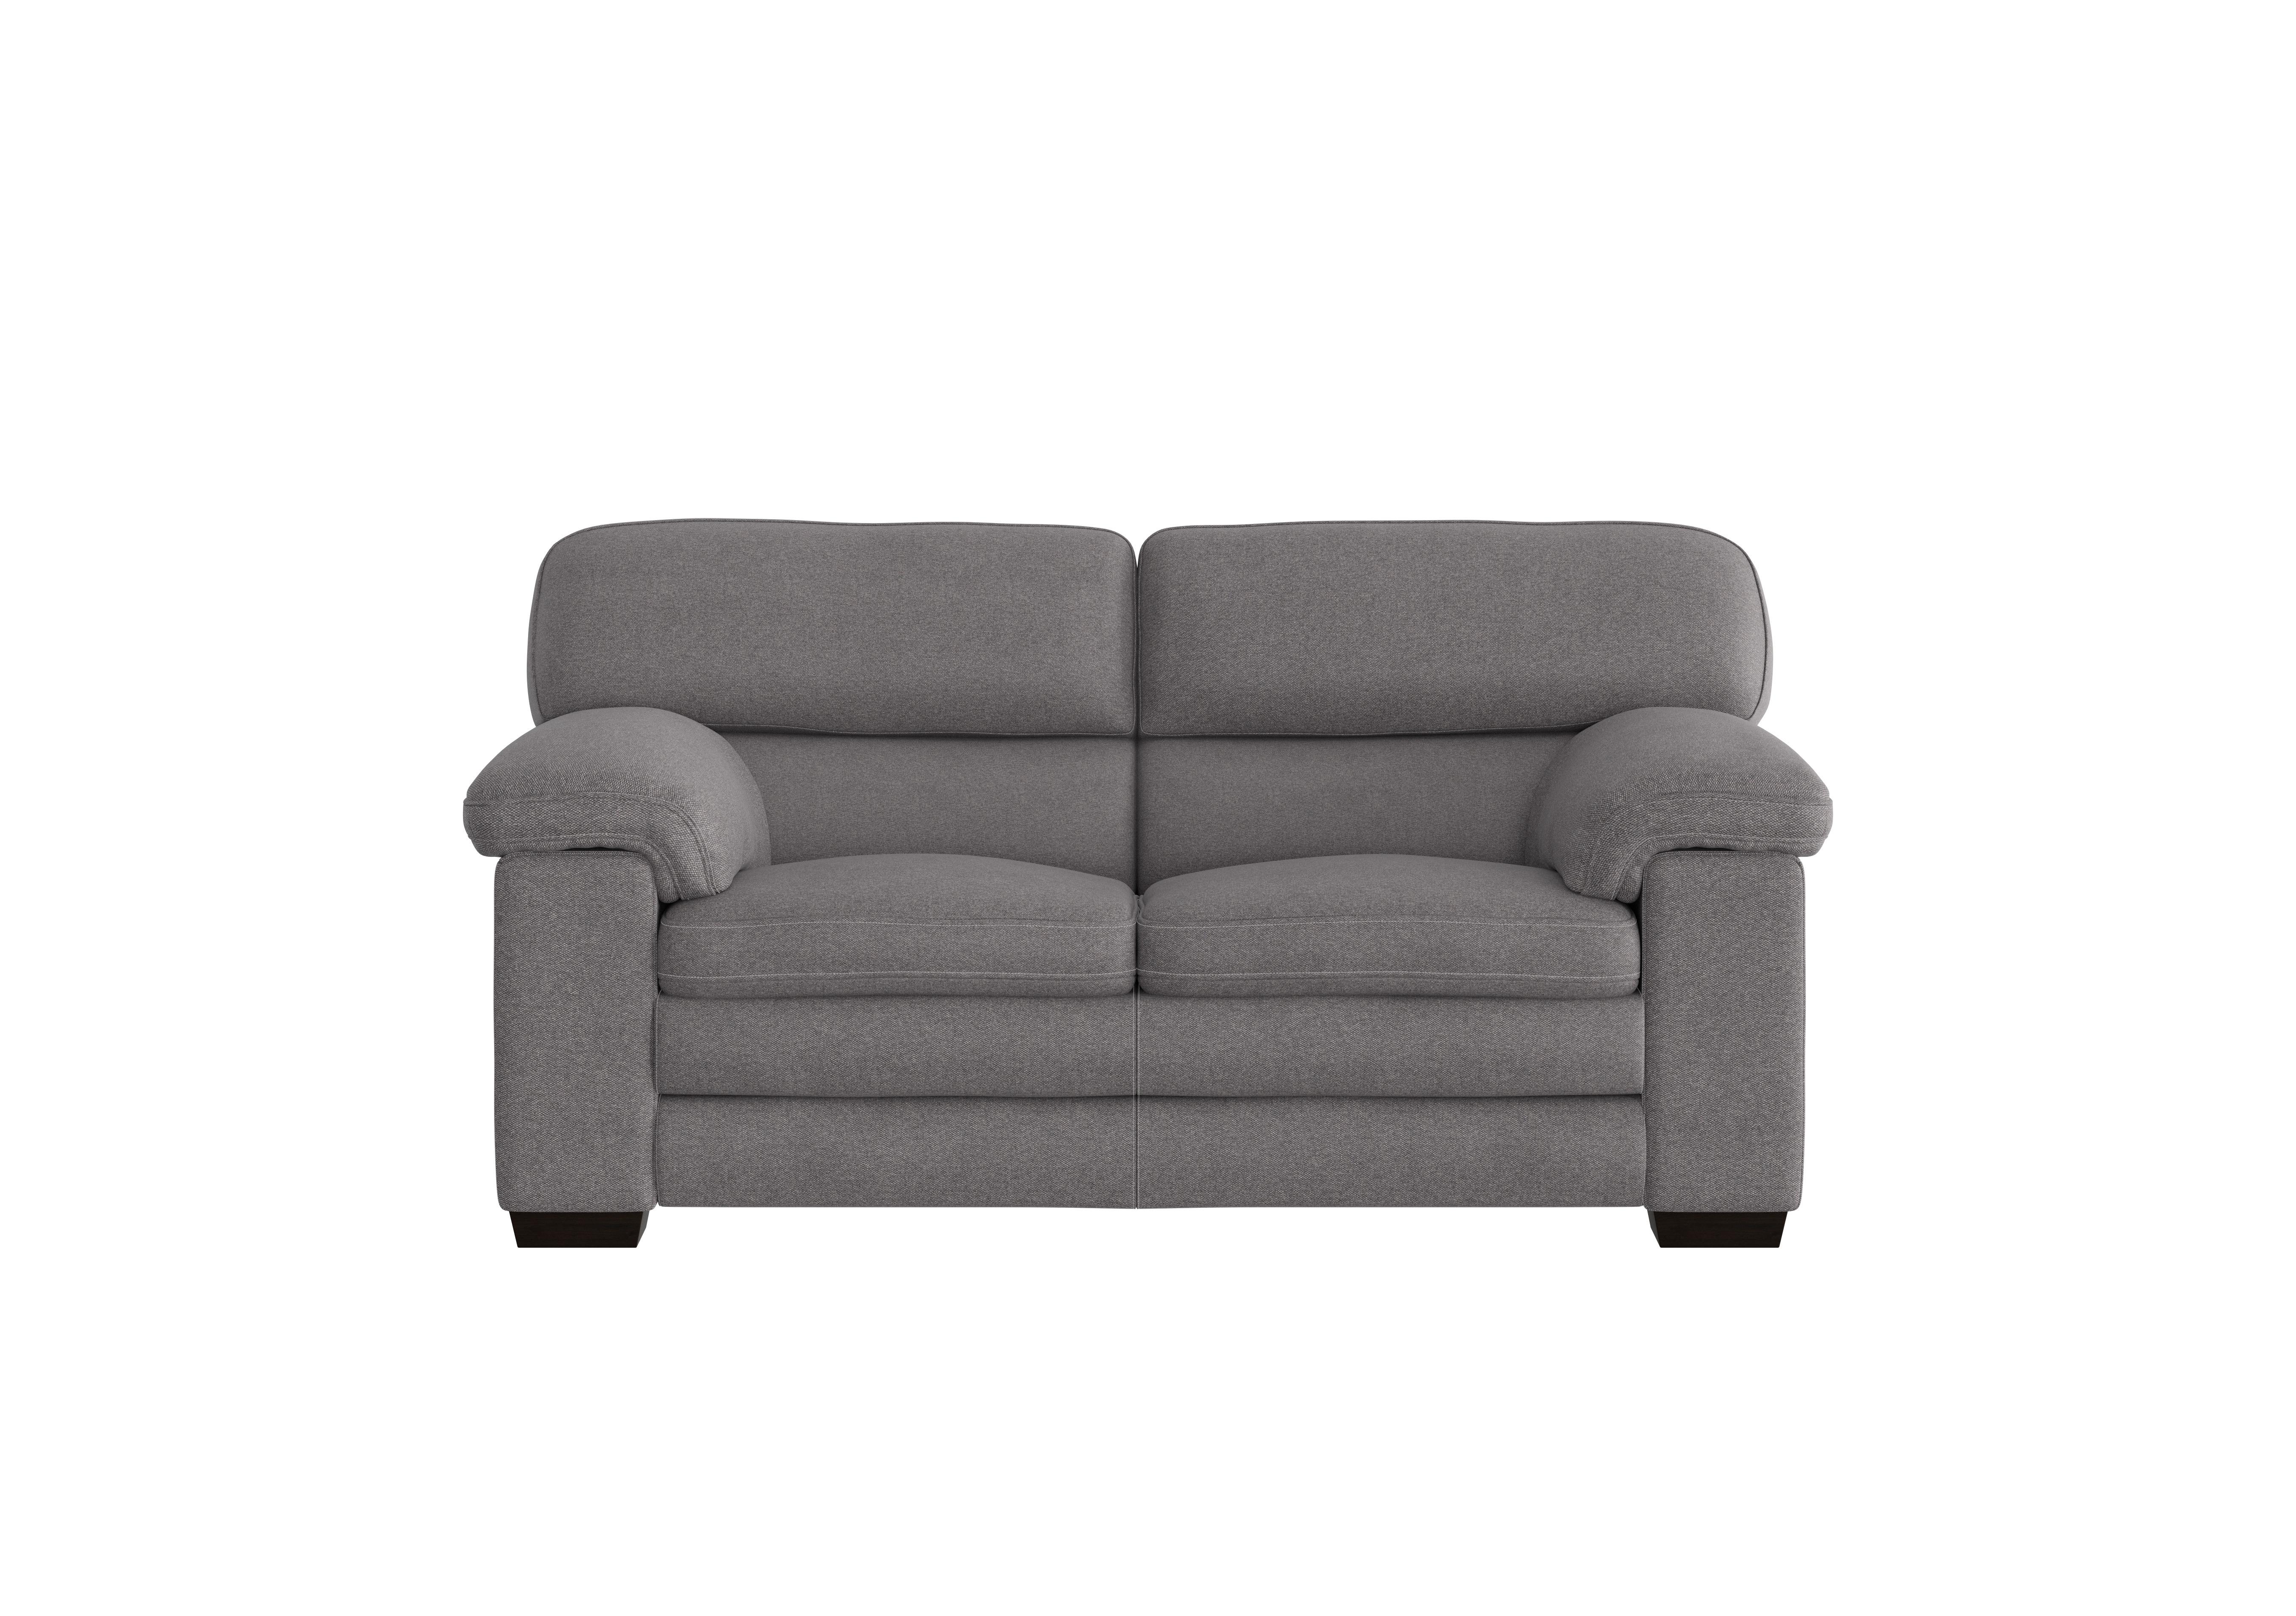 Cozee Fabric 2 Seater Sofa in Fab-Ska-R31 Charcoal Grey on Furniture Village